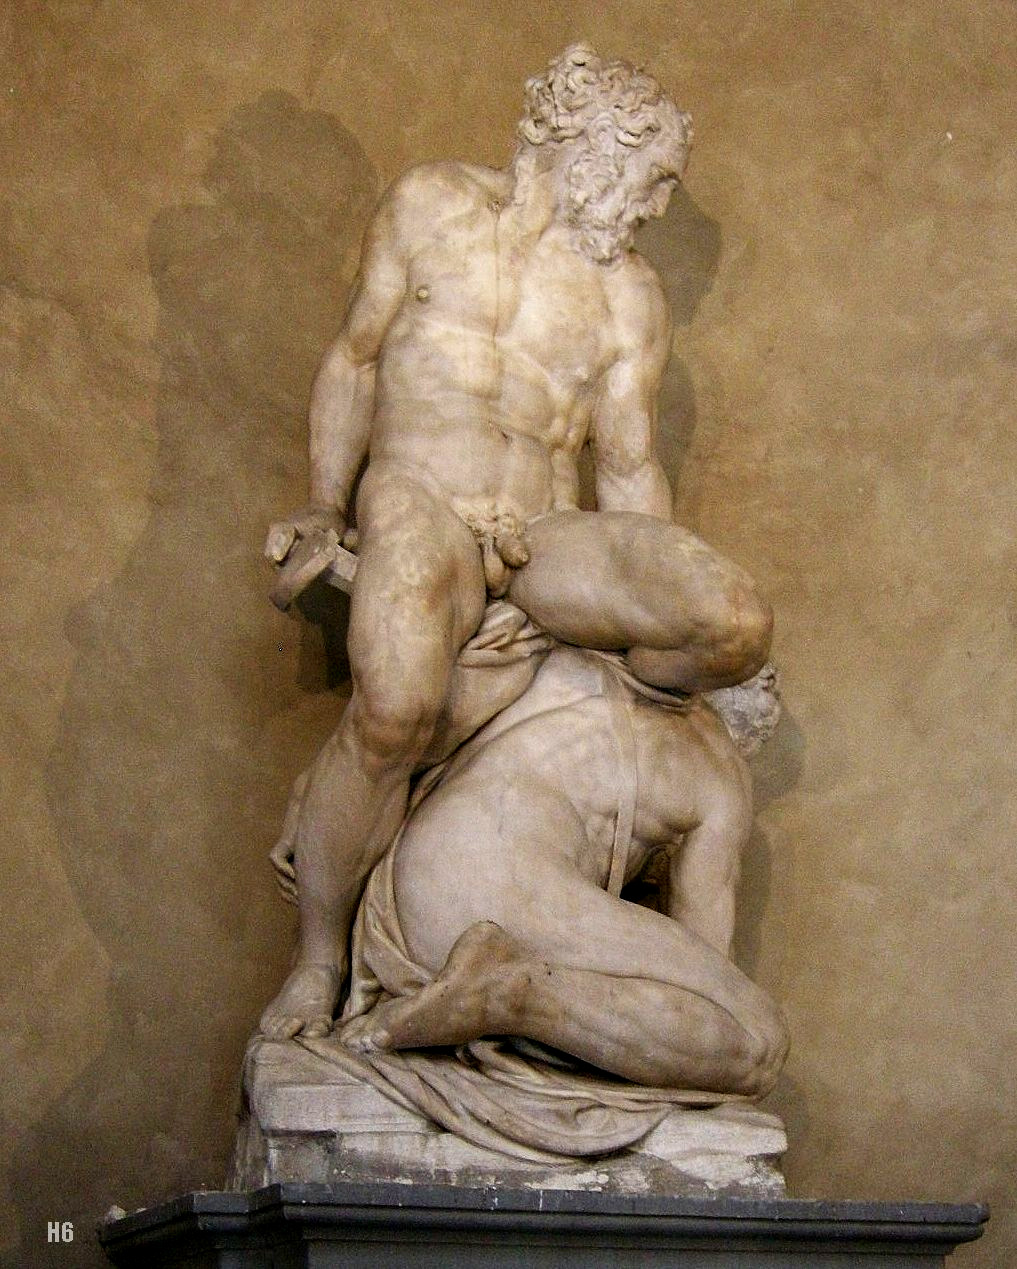 Samson and the Philistine. 16th.century. Pierino da Vinci. Italian 1529-1553. marble.
http://hadrian6.tumblr.com